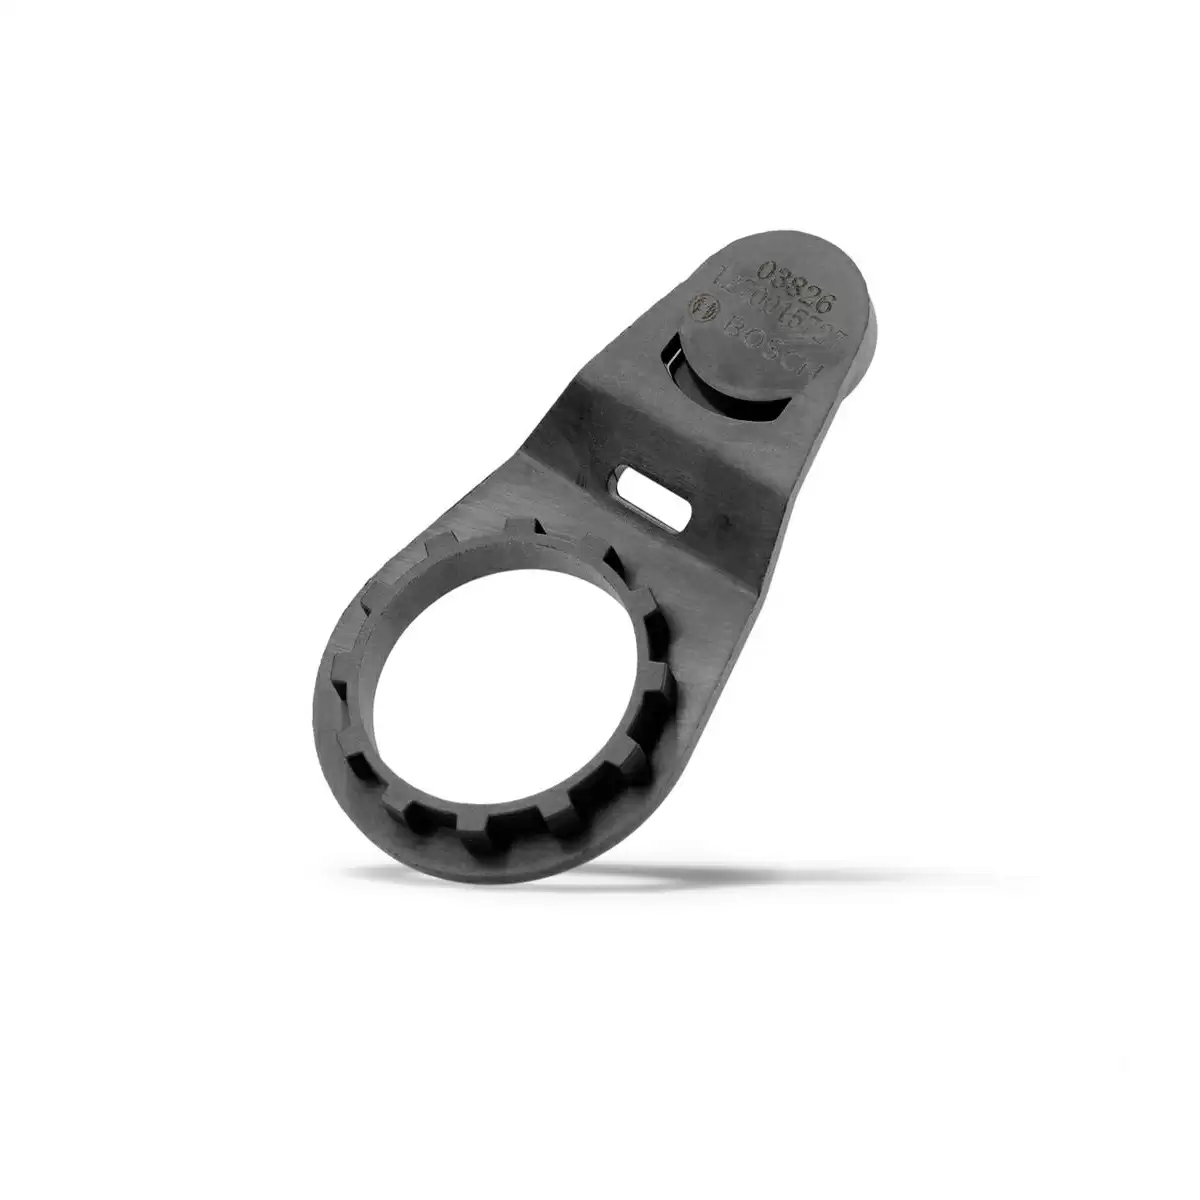 Disc magnetic ebike sensor compatible with centerlock #1